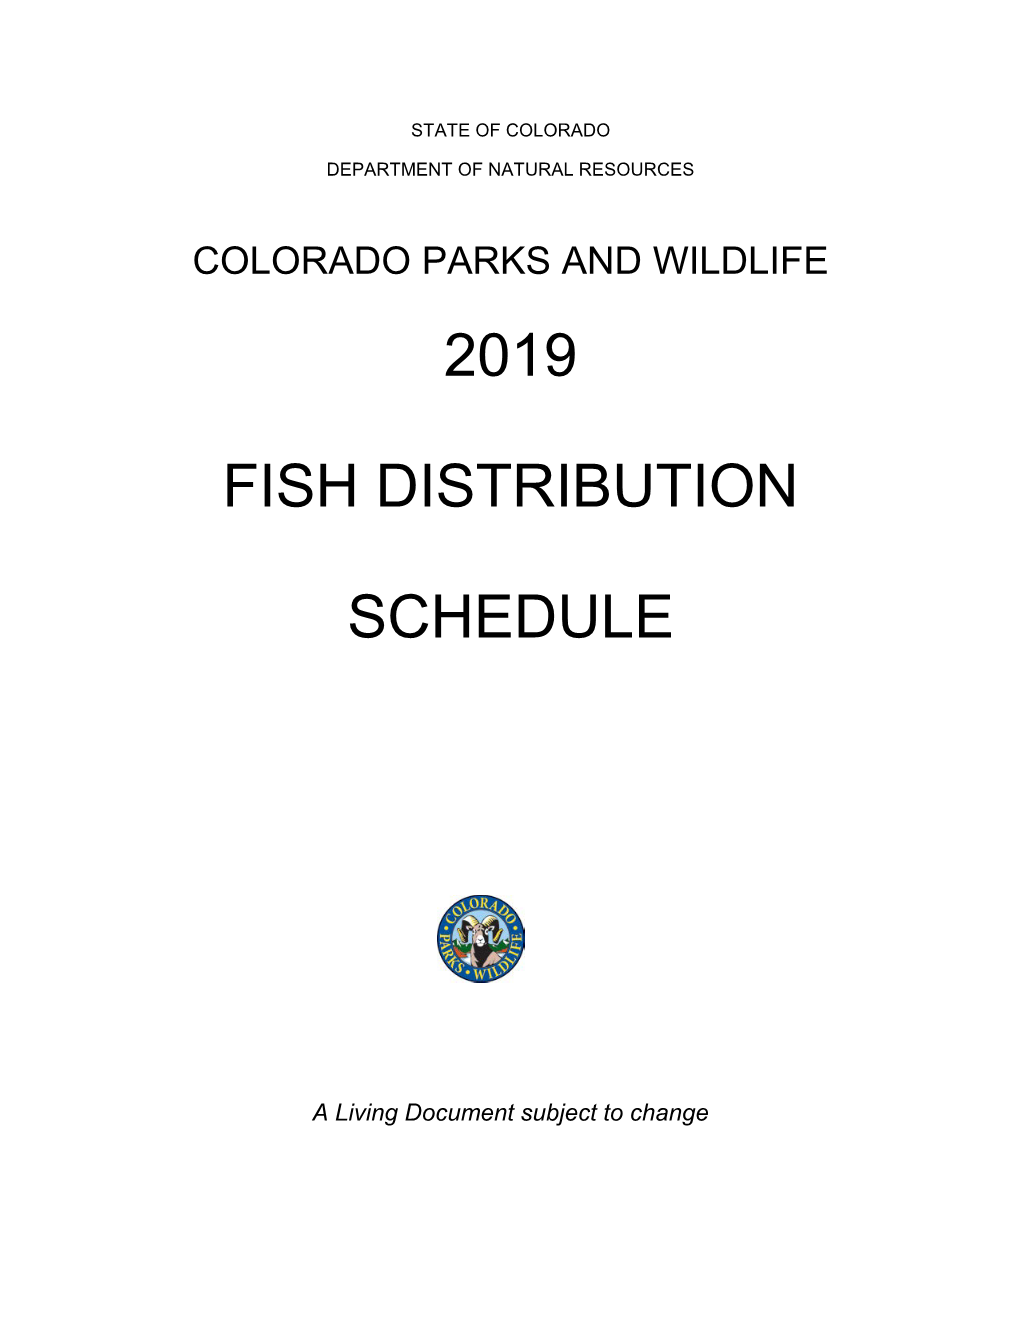 2019 Fish Distribution Schedule